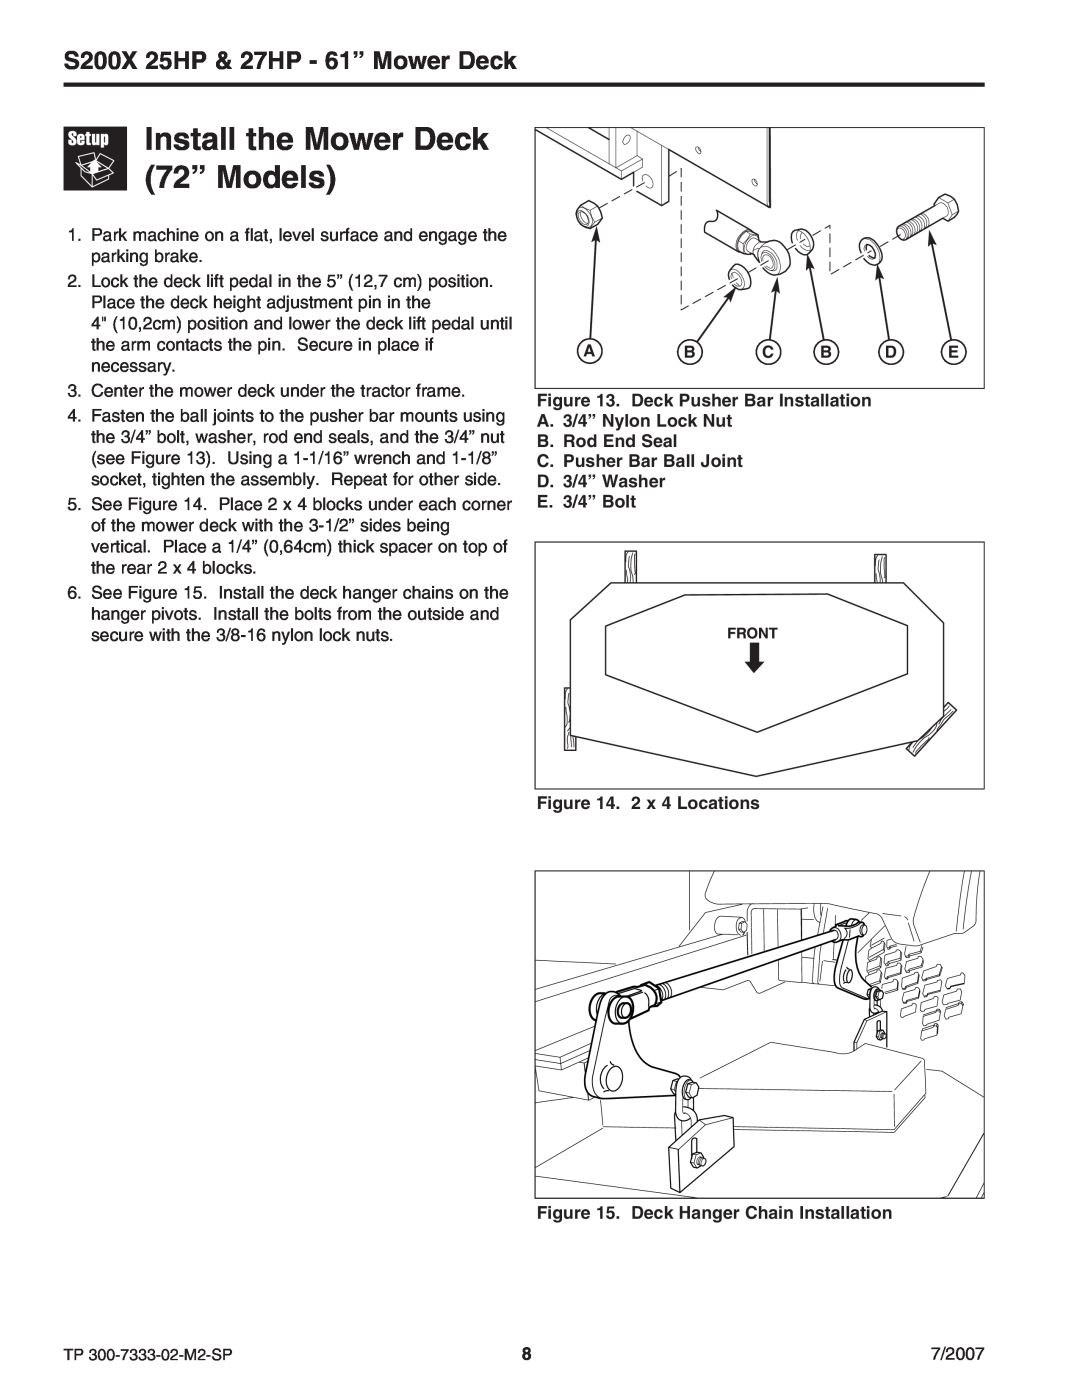 Briggs & Stratton 5900692, 5900664 manual Install the Mower Deck 72” Models, S200X 25HP & 27HP - 61” Mower Deck 